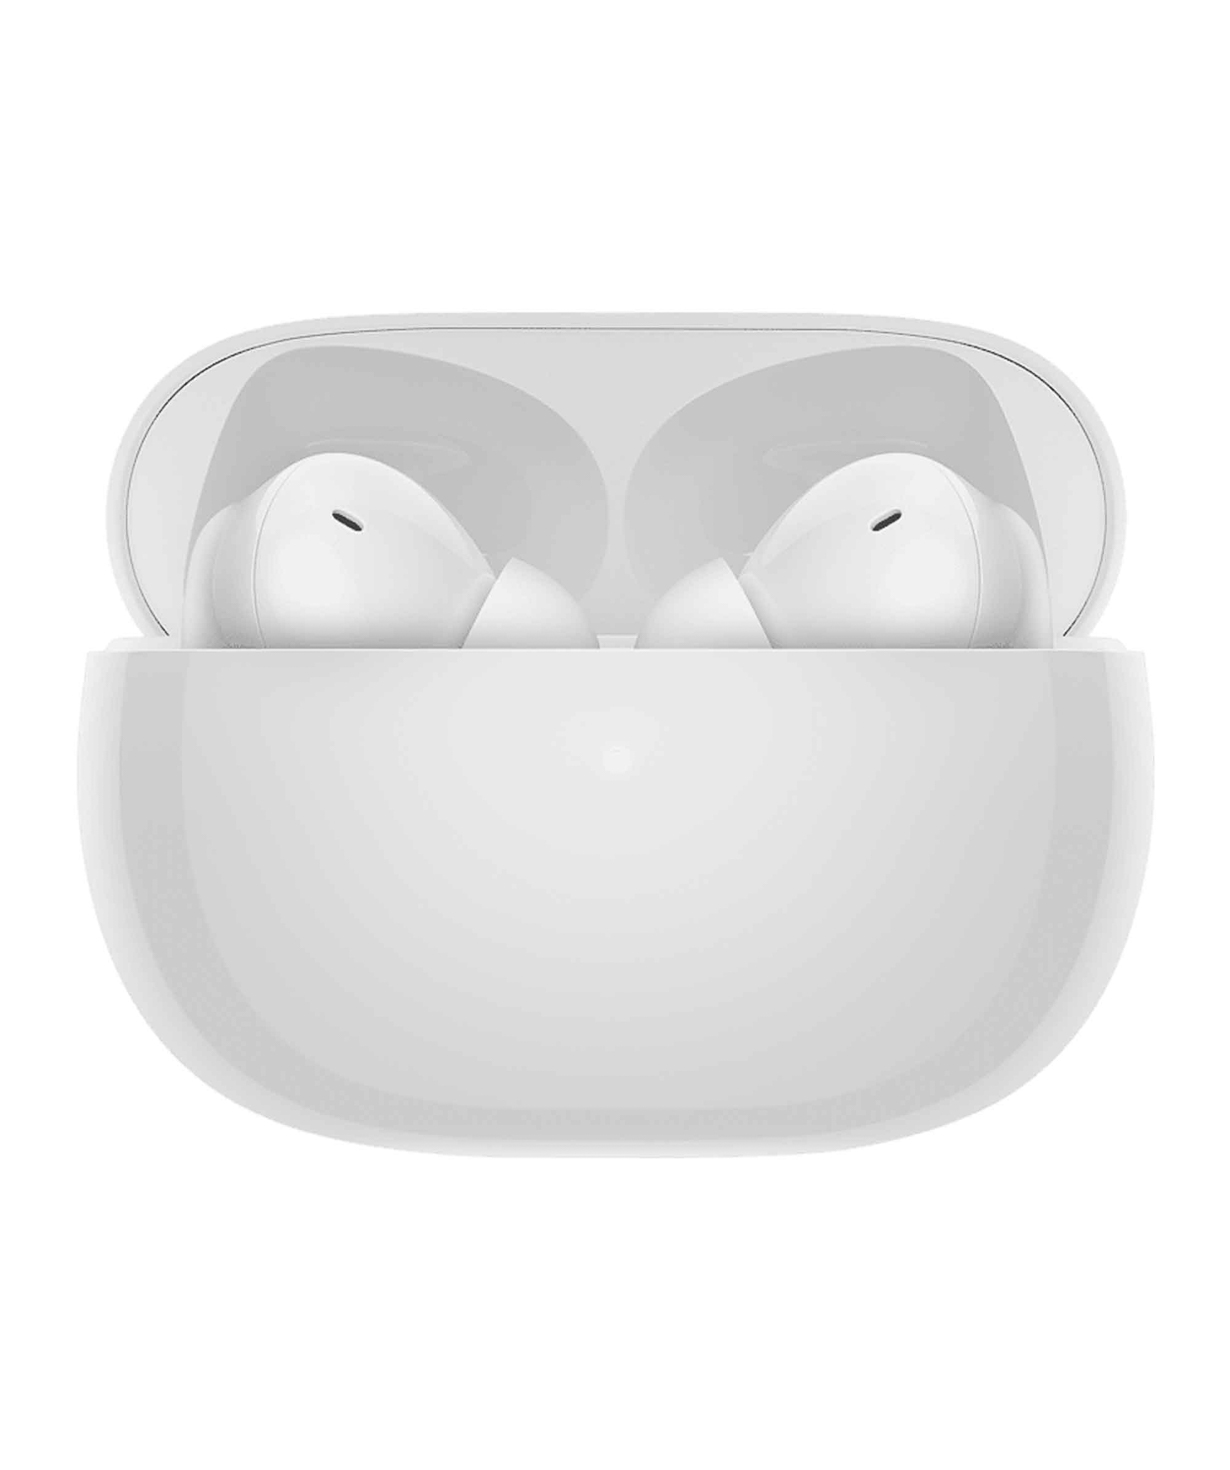 Wireless earbuds «Xiaomi Redmi» 4 Pro, white